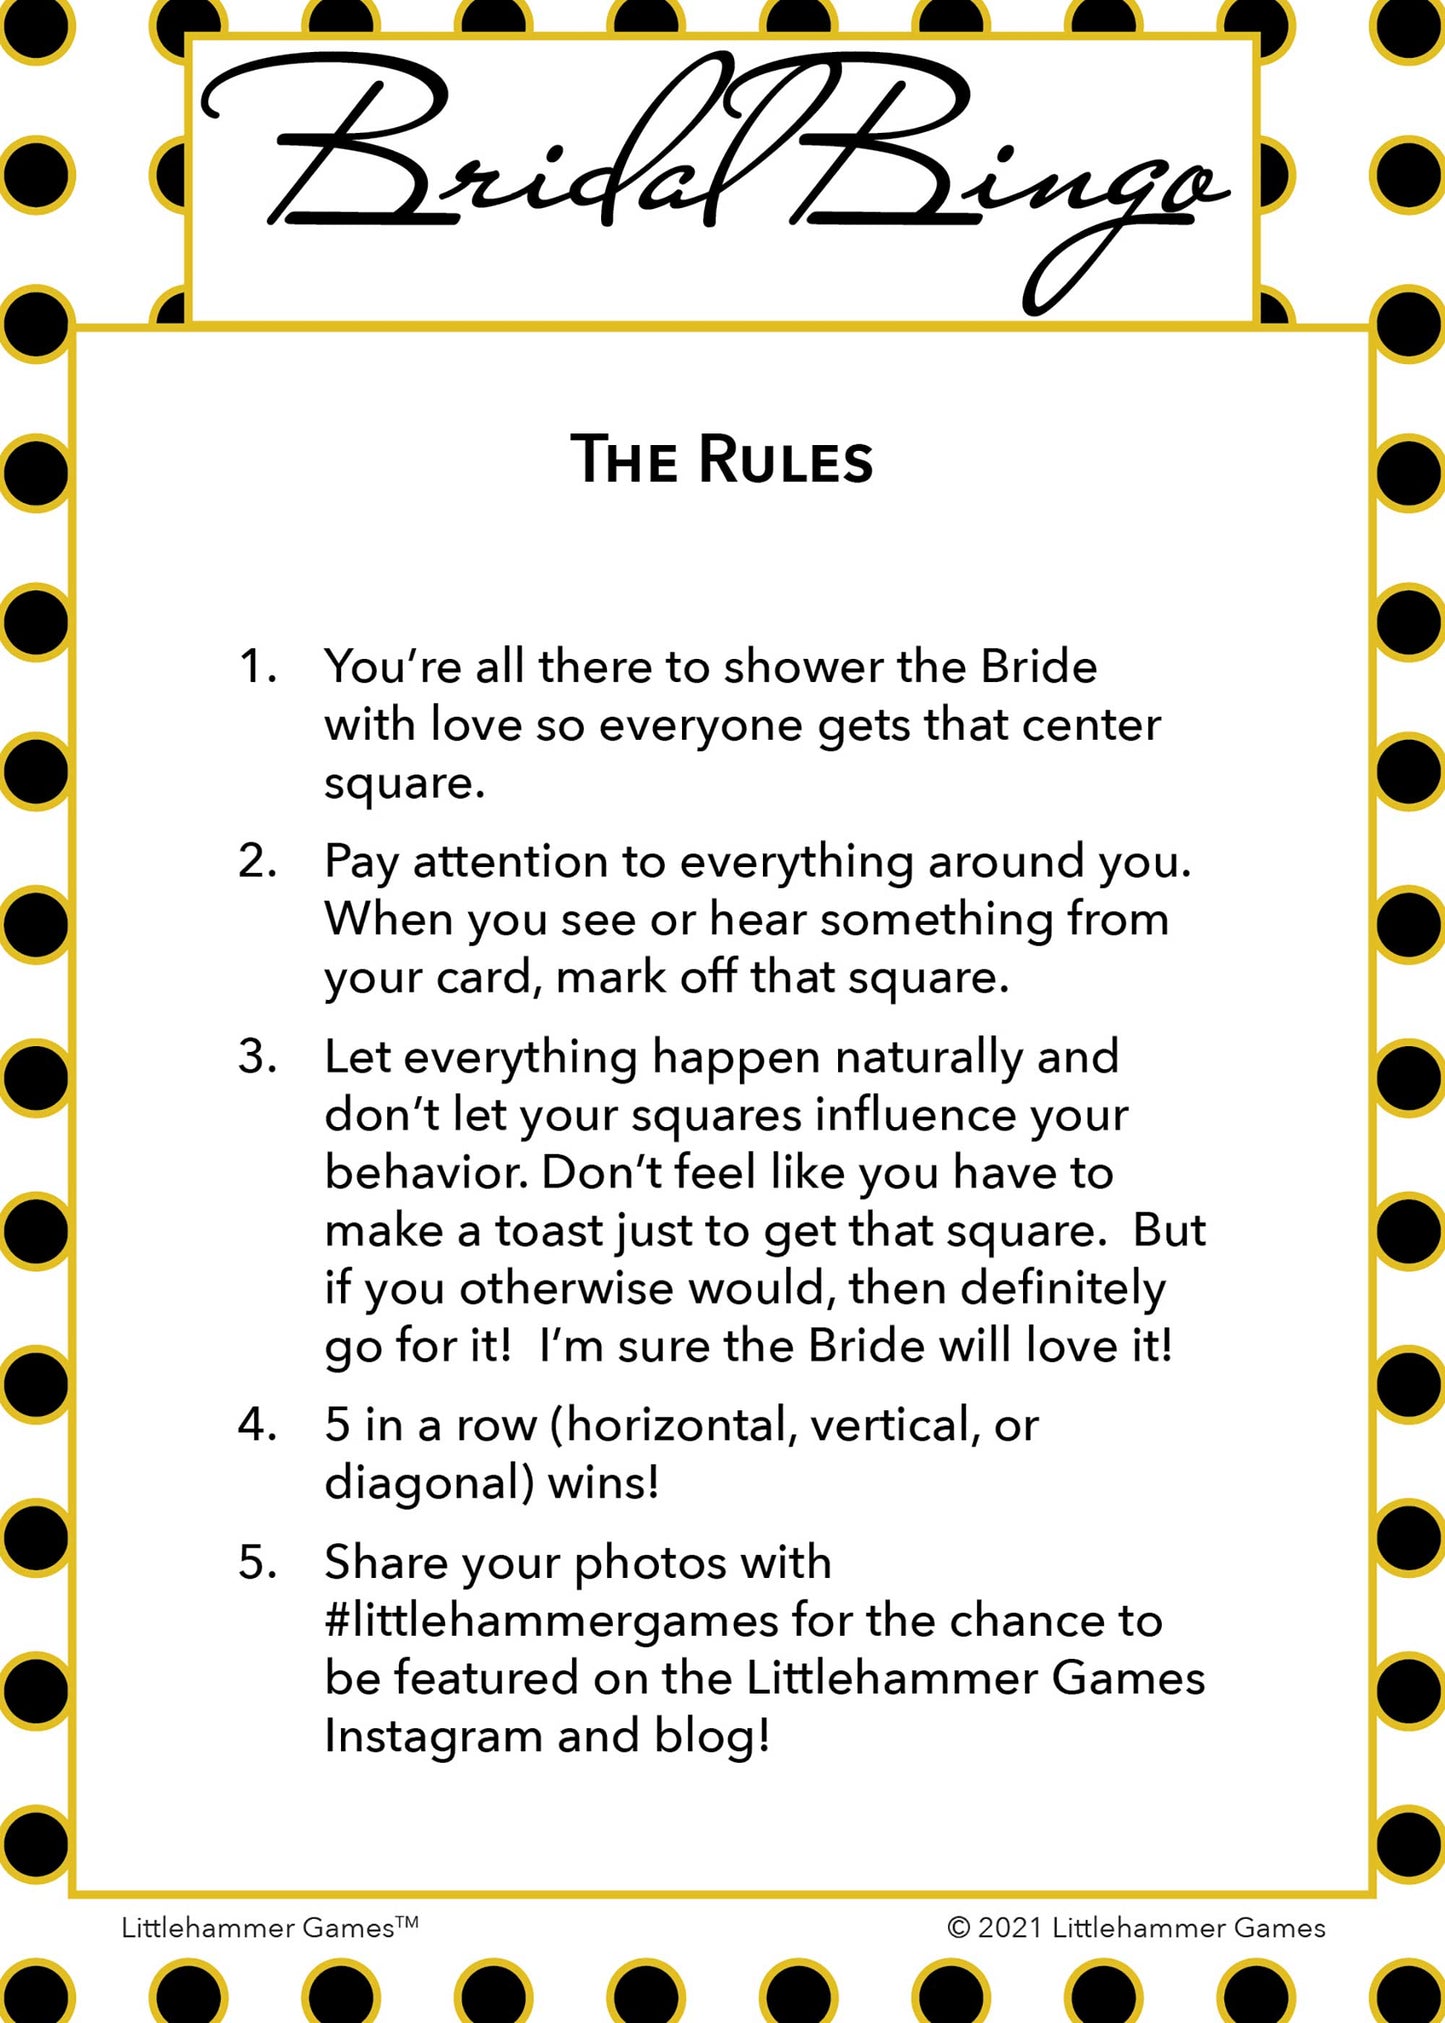 Bridal Bingo rules card on a black and gold polka dot background